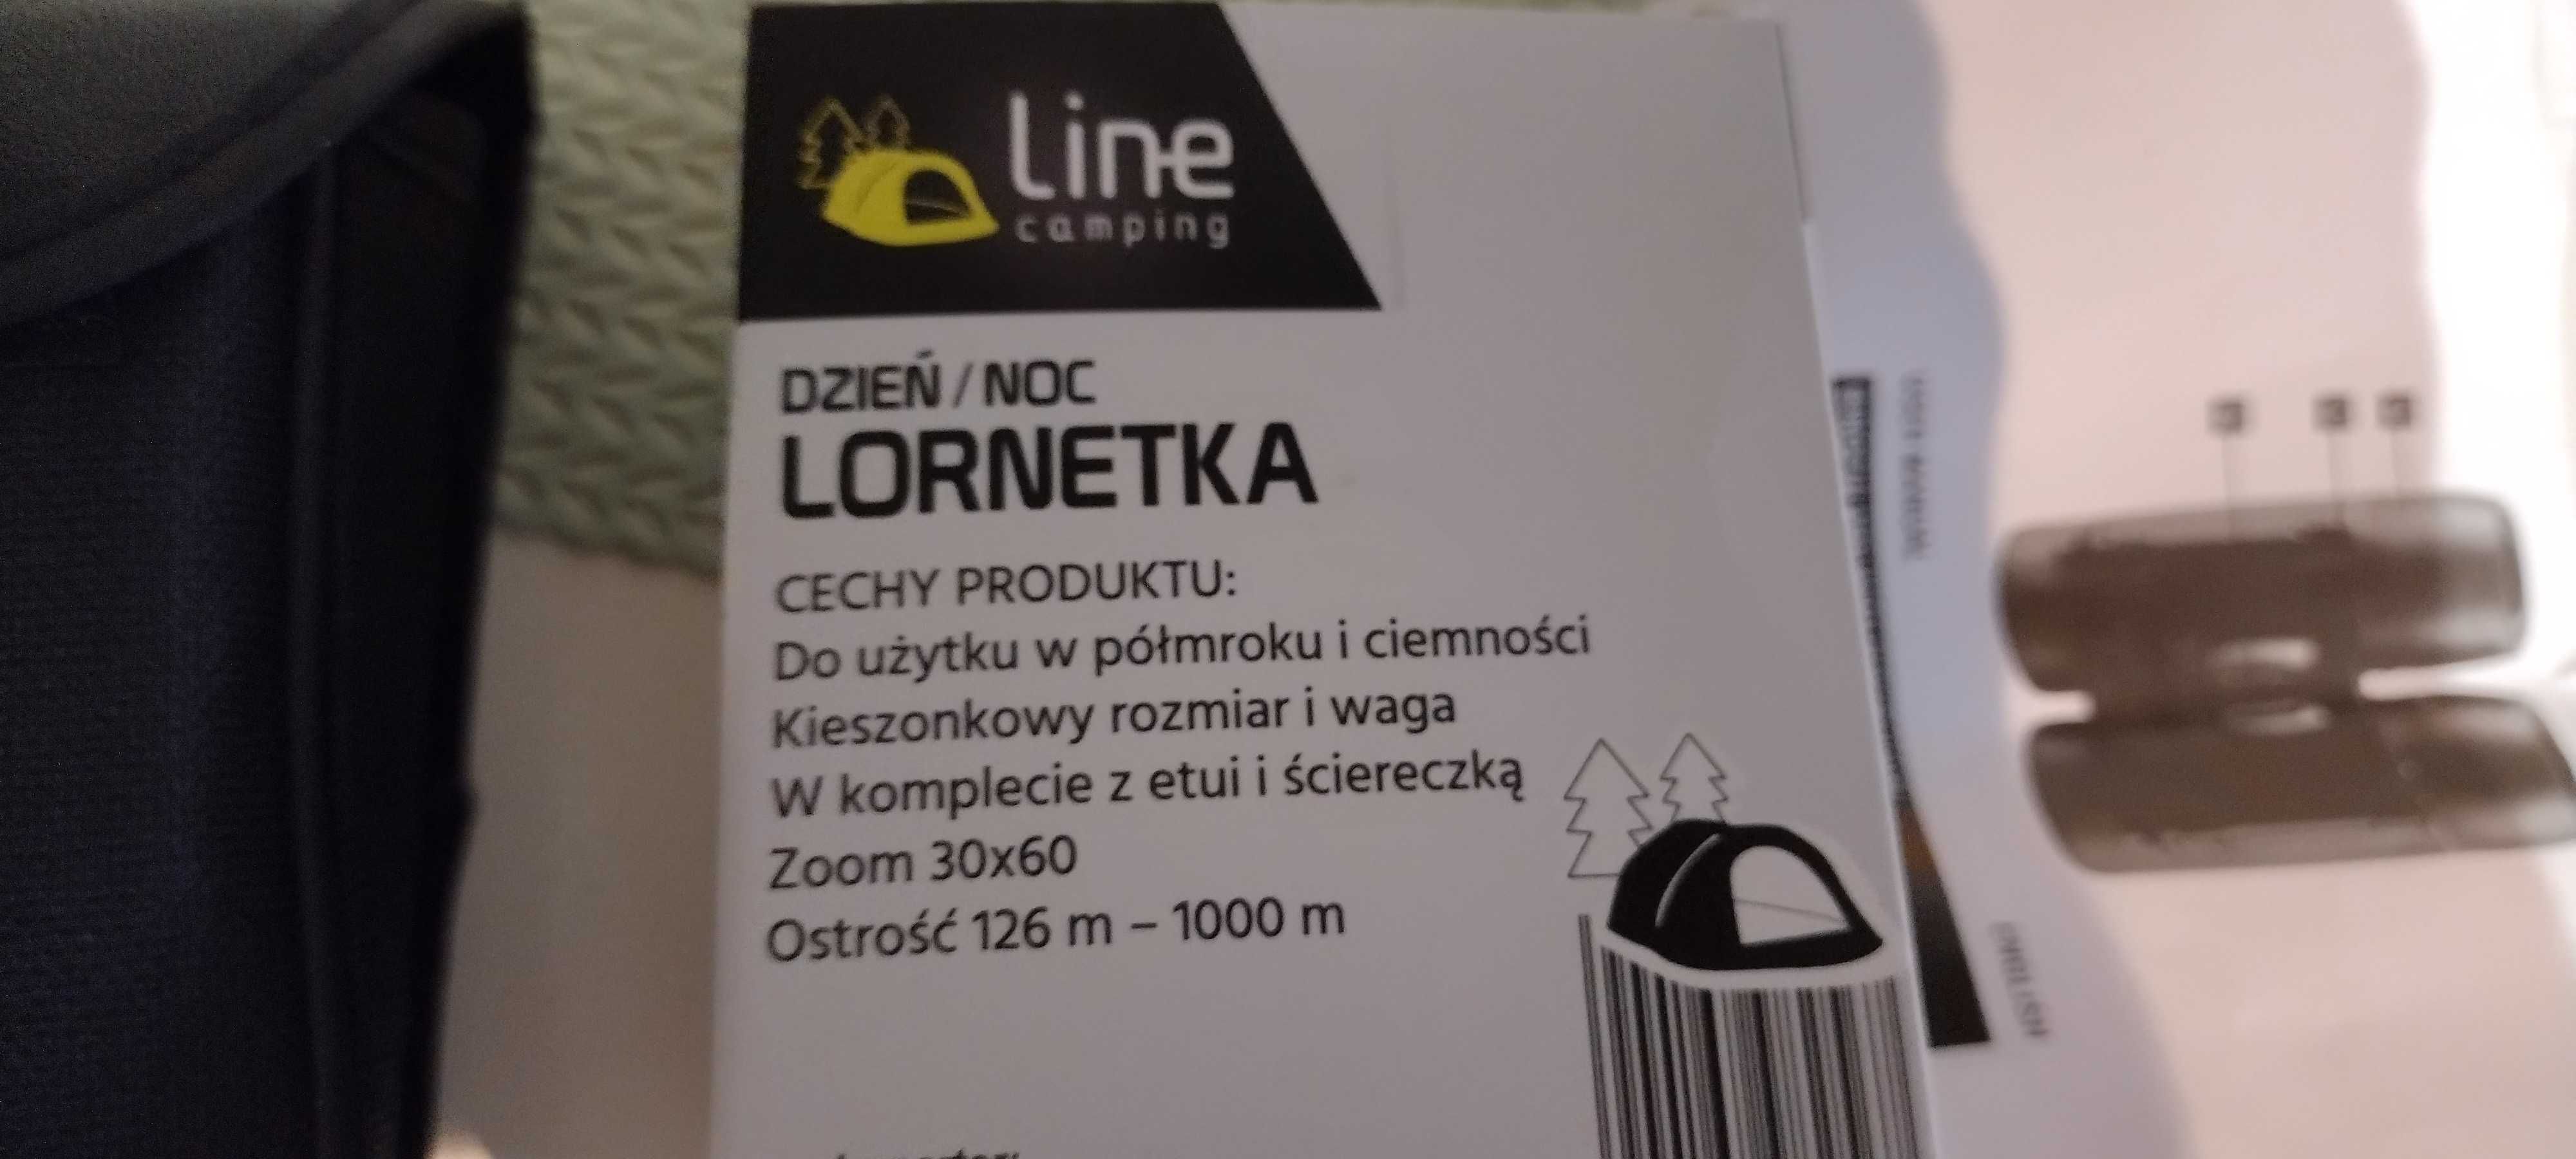 Lornetka line camping dzień noc